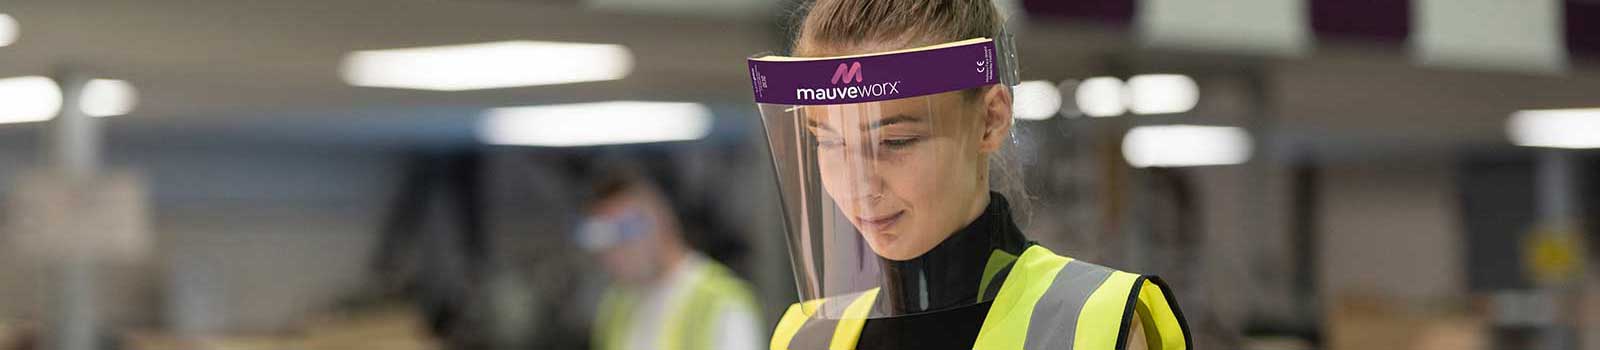 Key worker using custom branded face shield in factory wearing high vis jacket